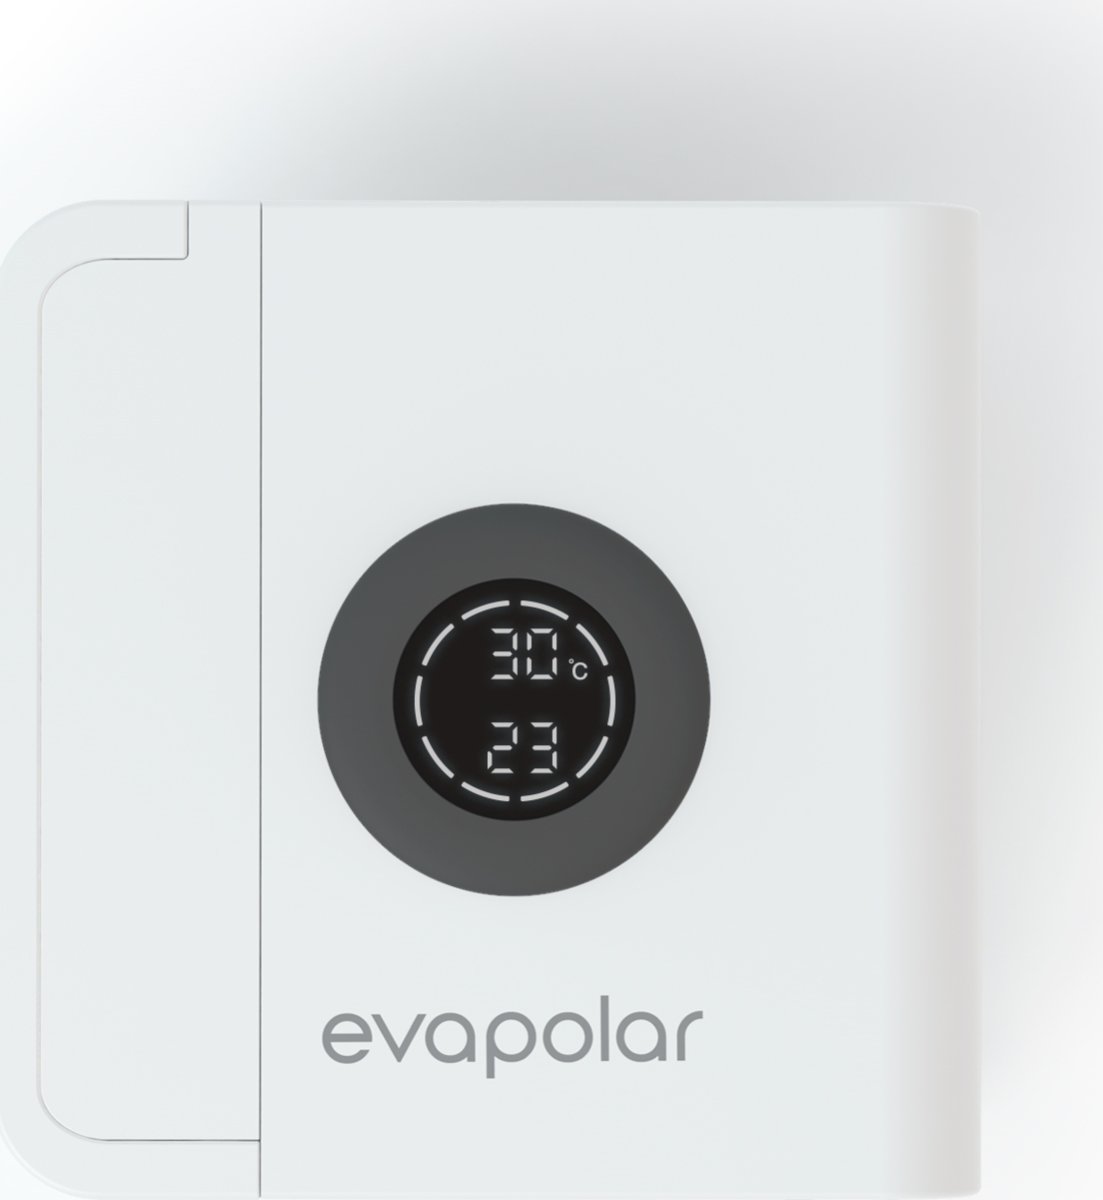 Evapolar evaLight Plus personlig luftkøler, hvid